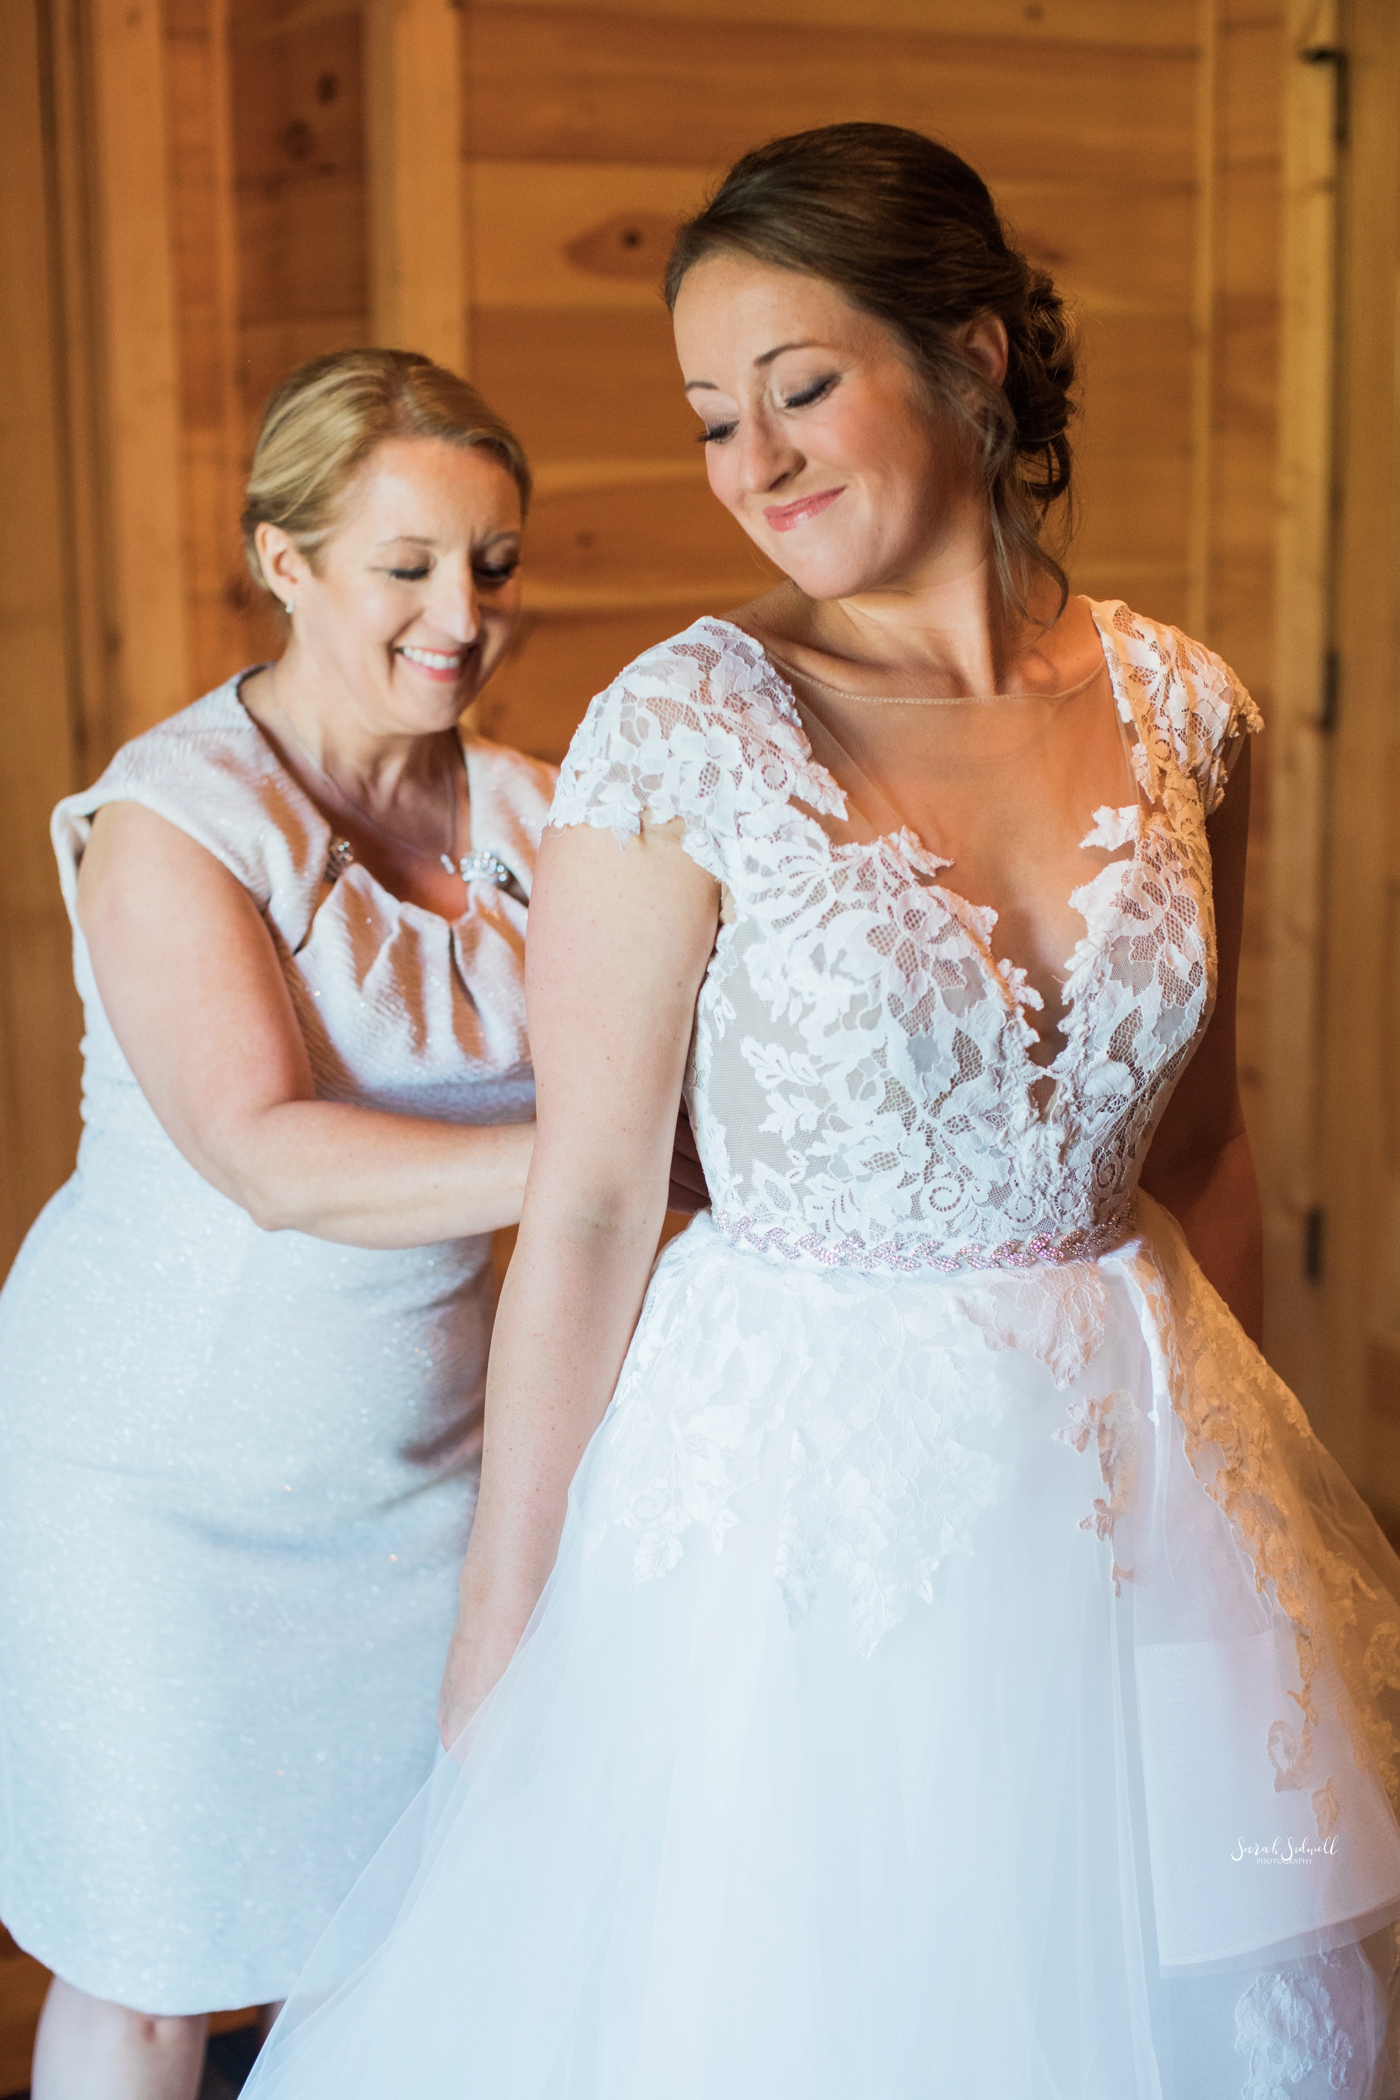 A bride gets help fastening her dress. 